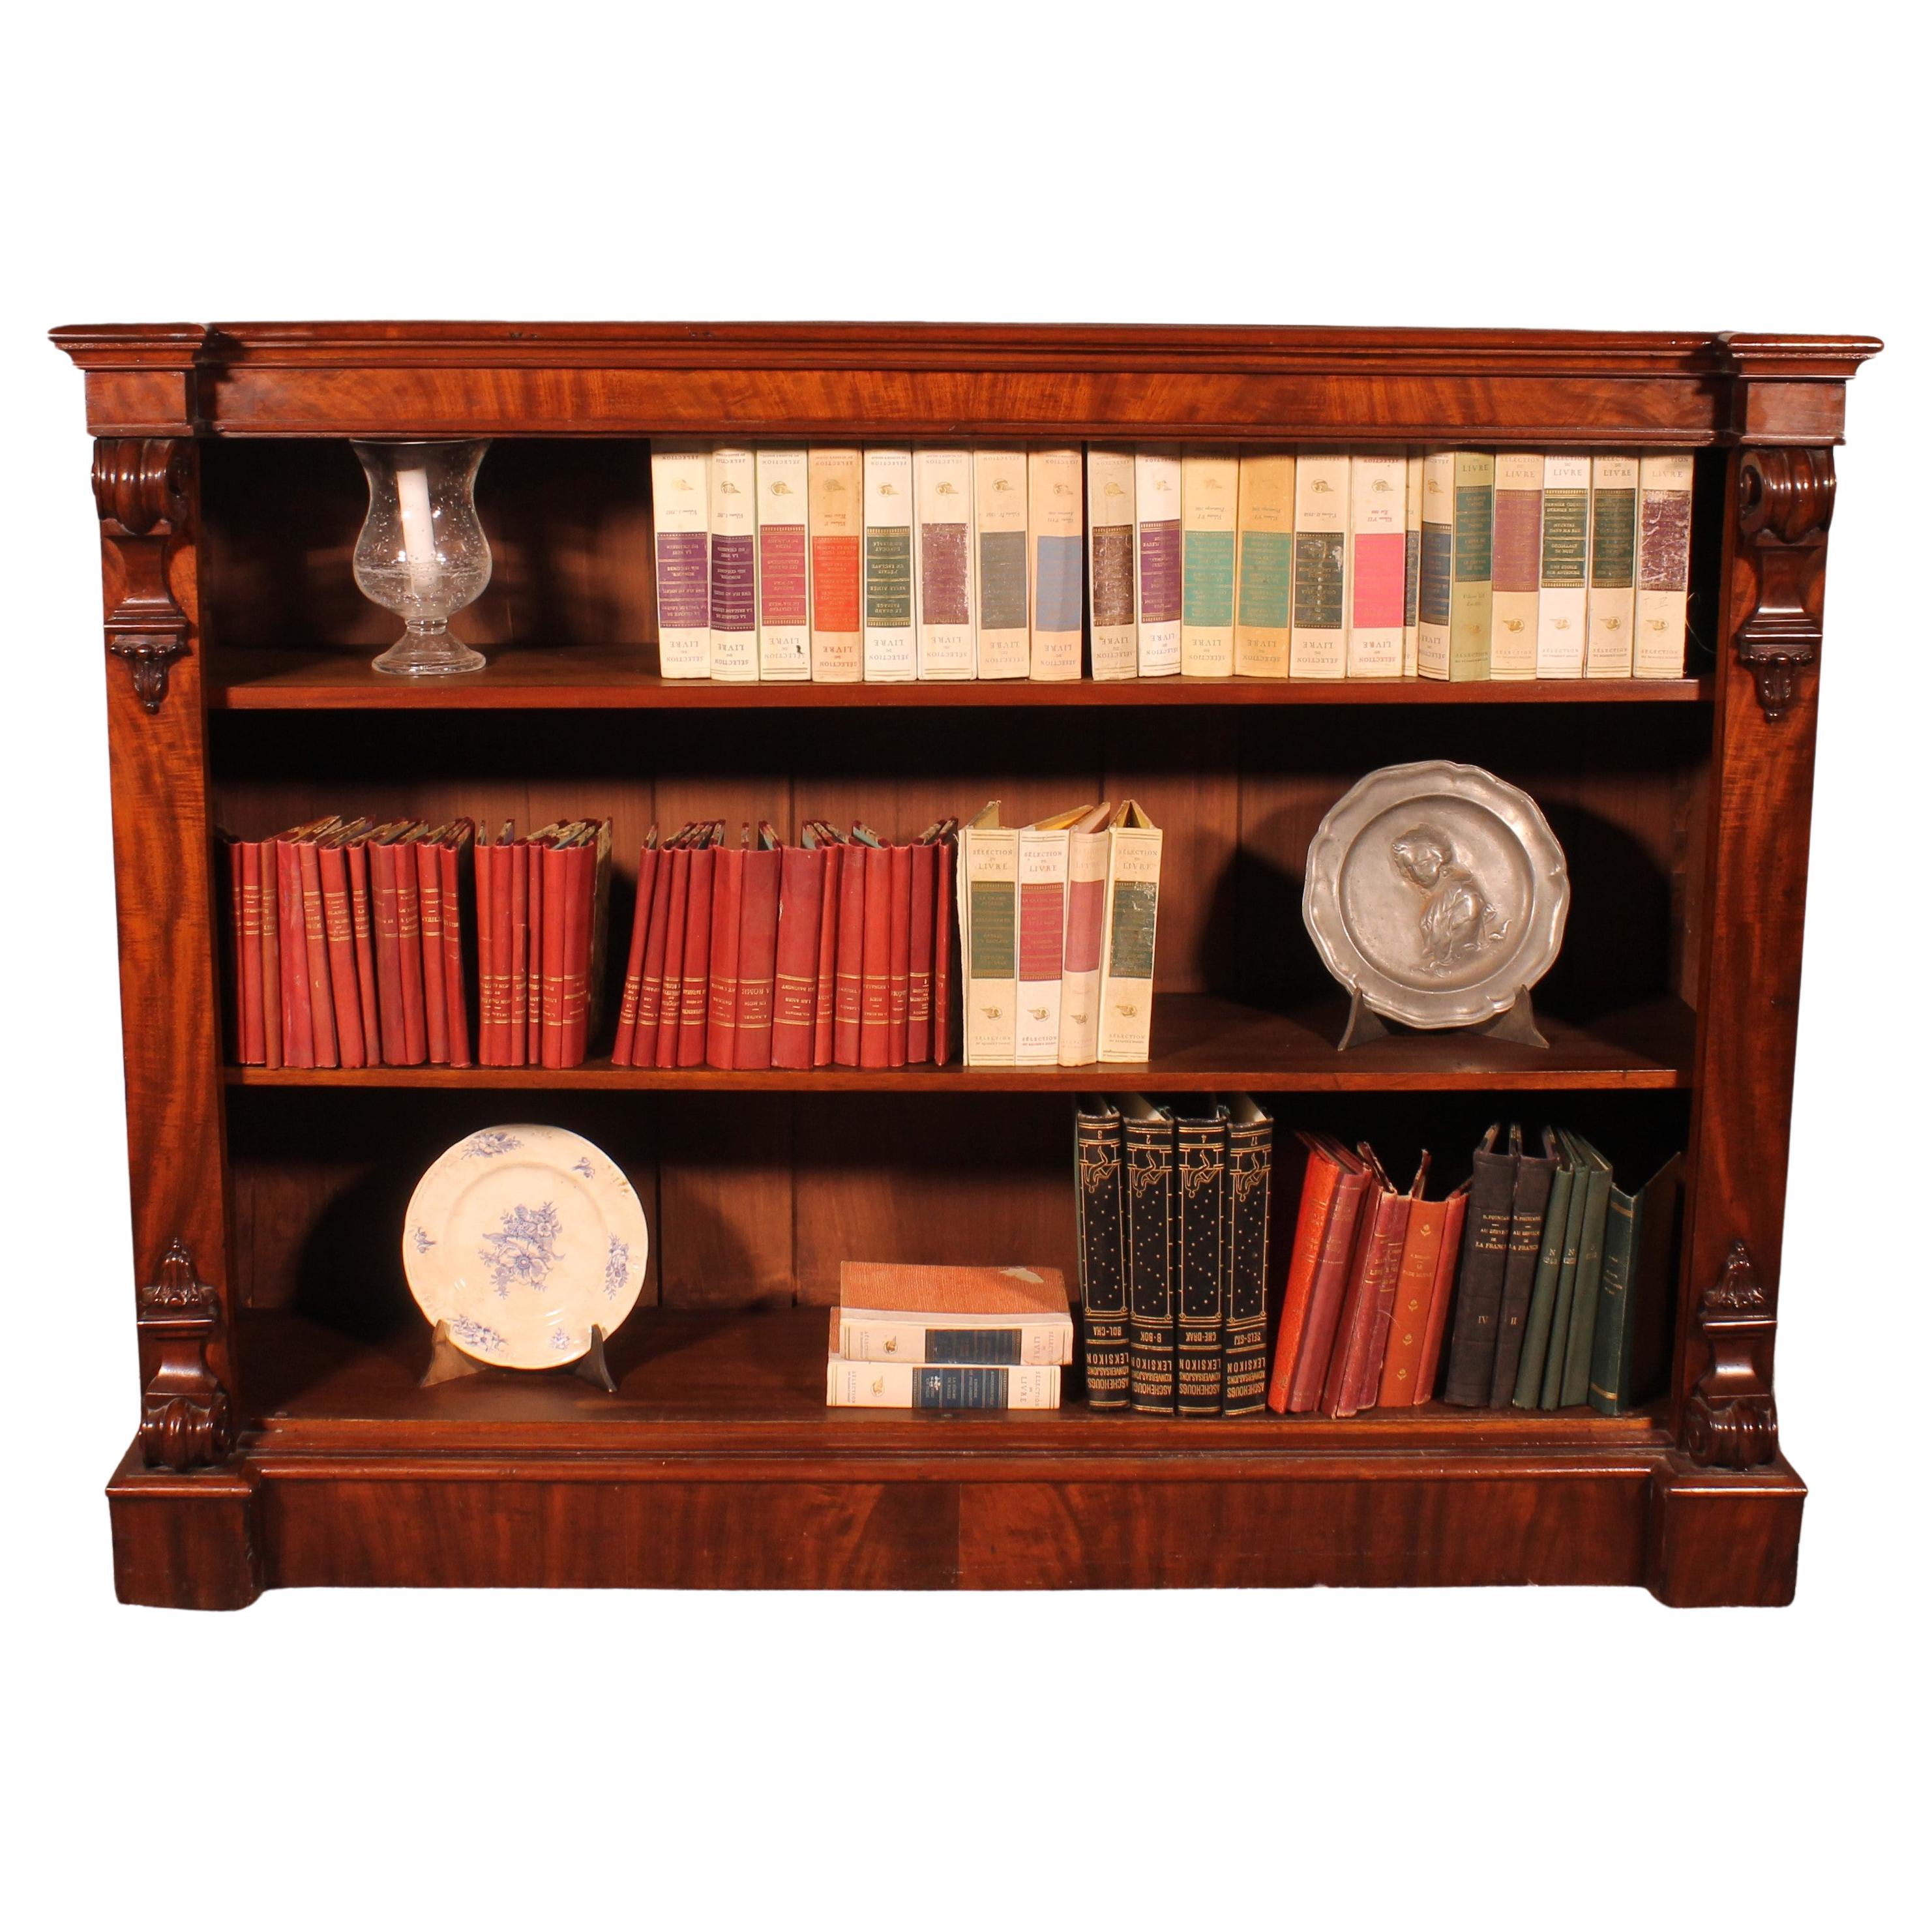 Offenes Bücherregal aus Mahagoni aus dem 19. Jahrhundert – England